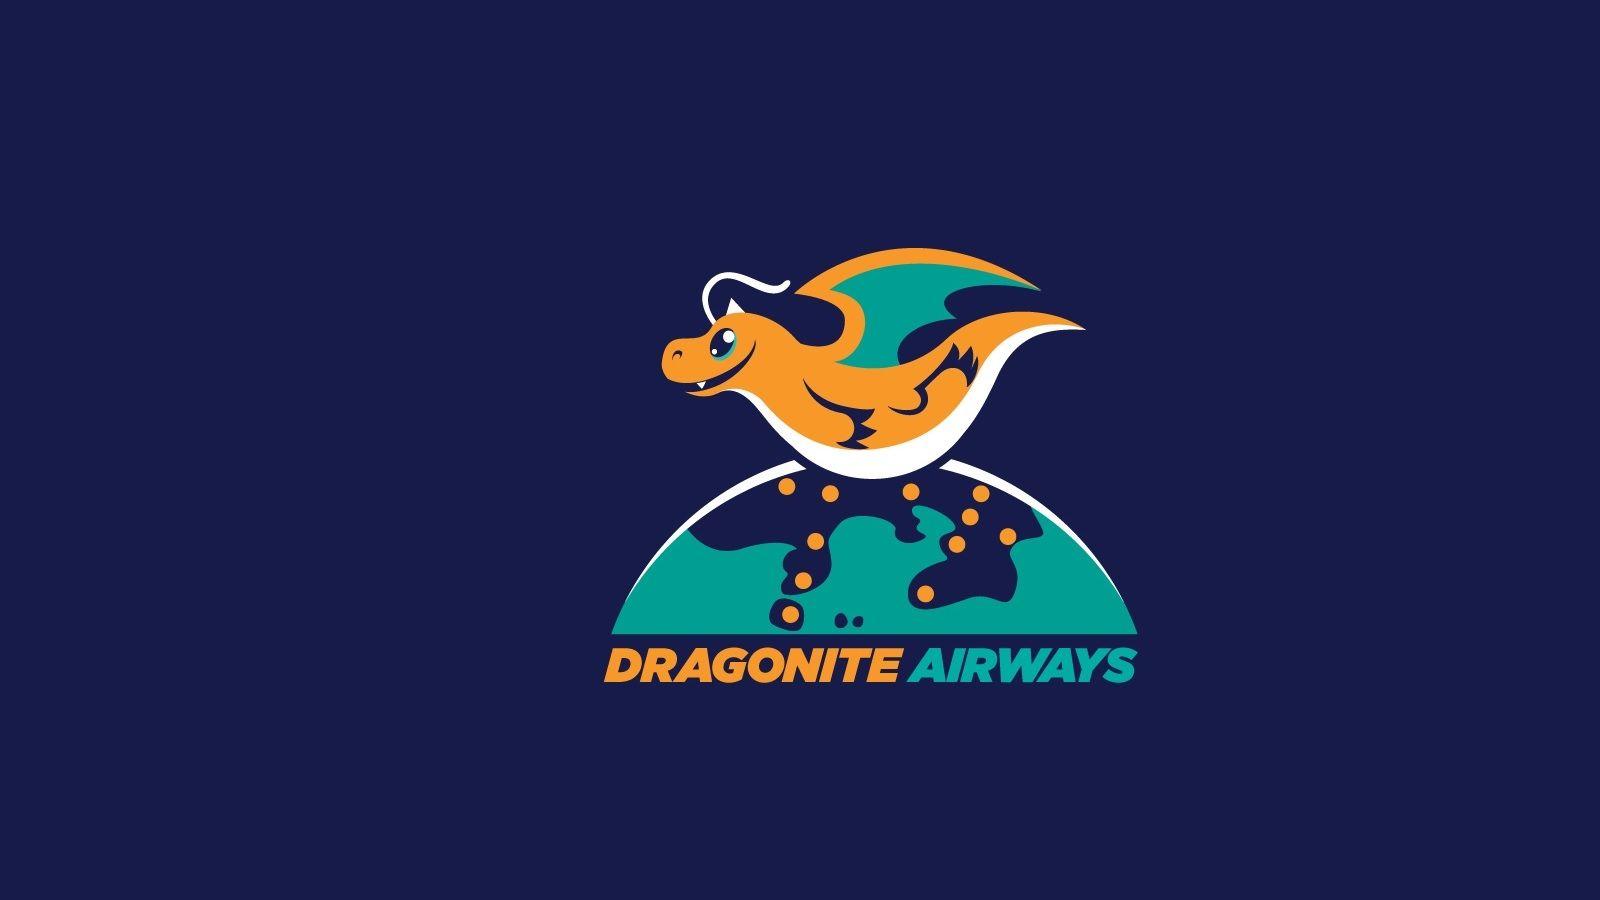 Dragonite Airways Wallpaper (1600x900)